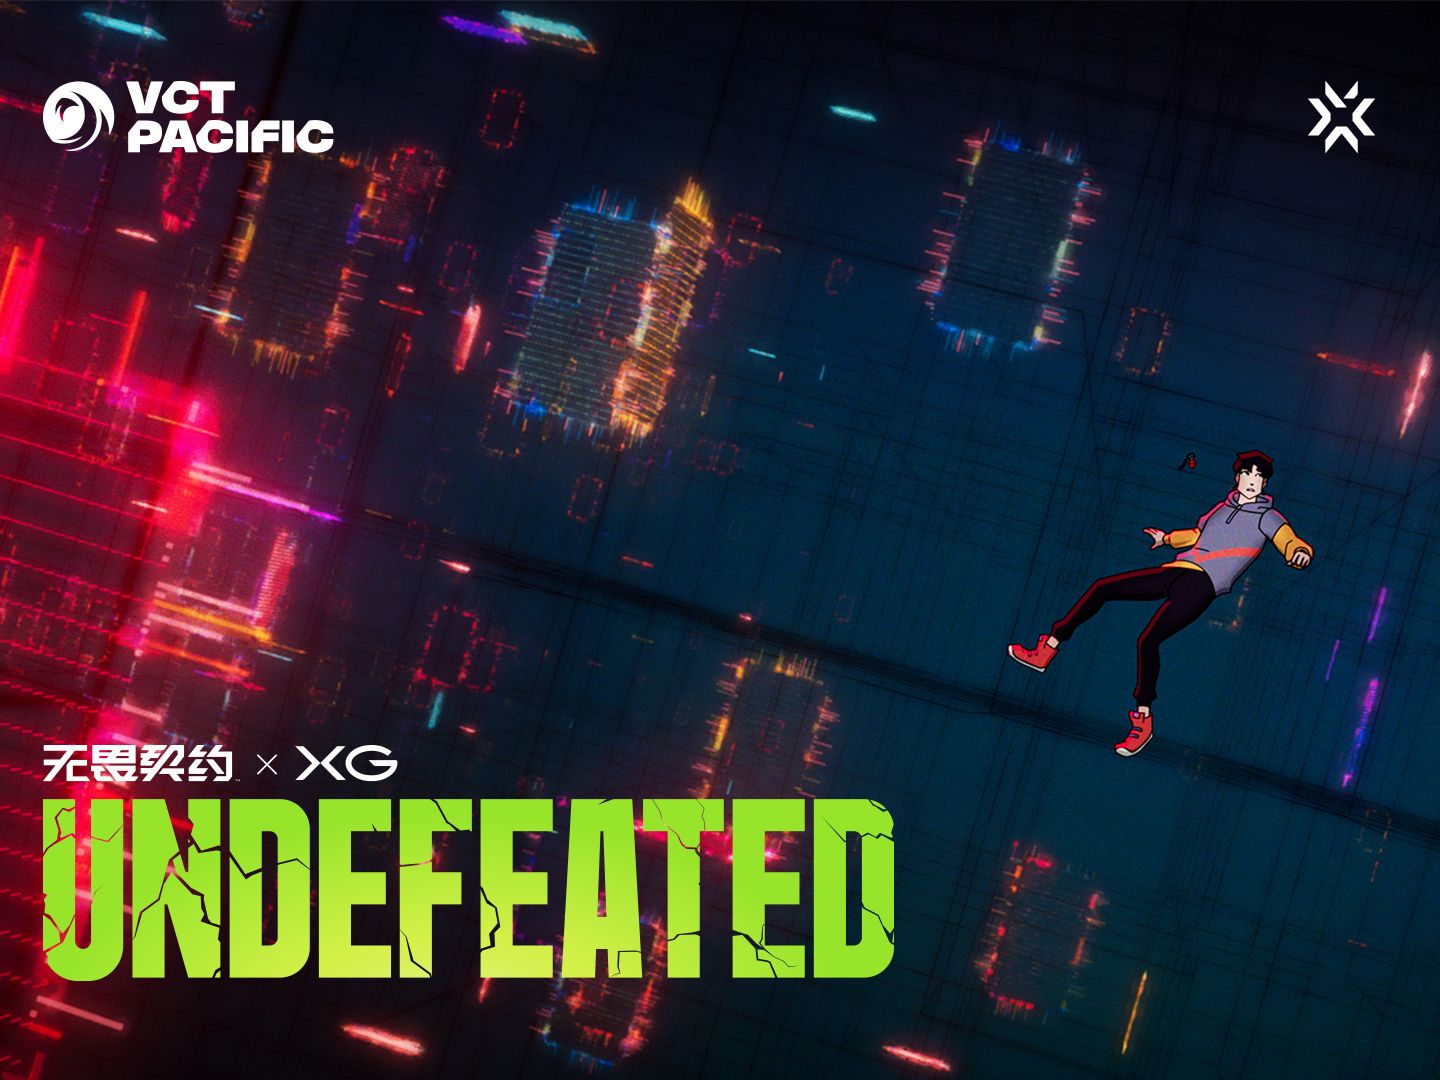 《UNDEFEATED》丨无畏契约丨拳头游戏音乐